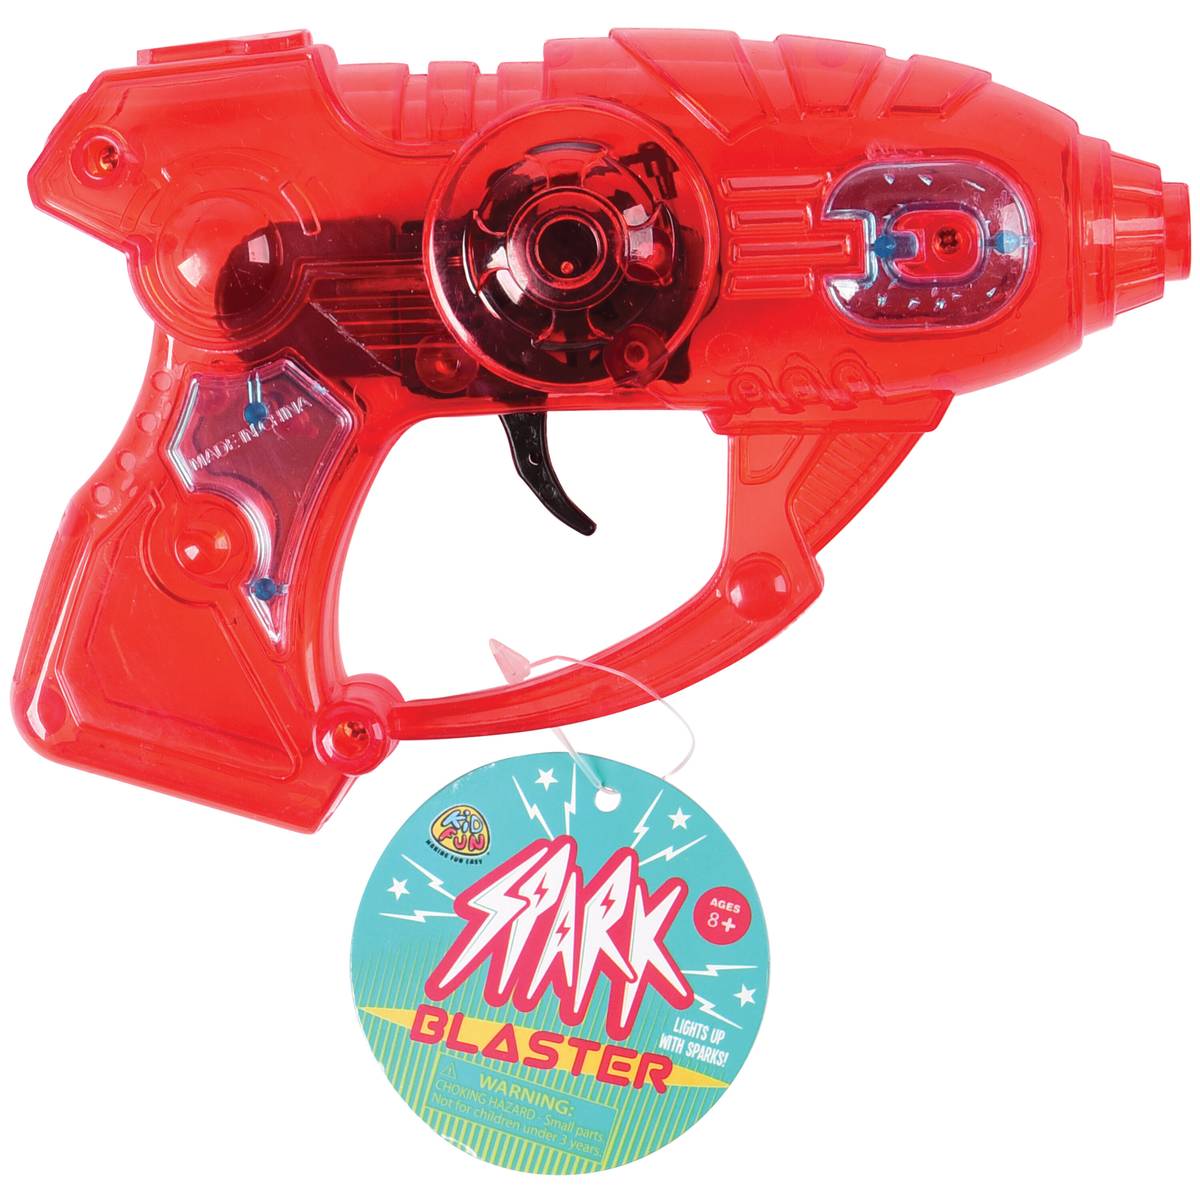 Spark Blaster Ray